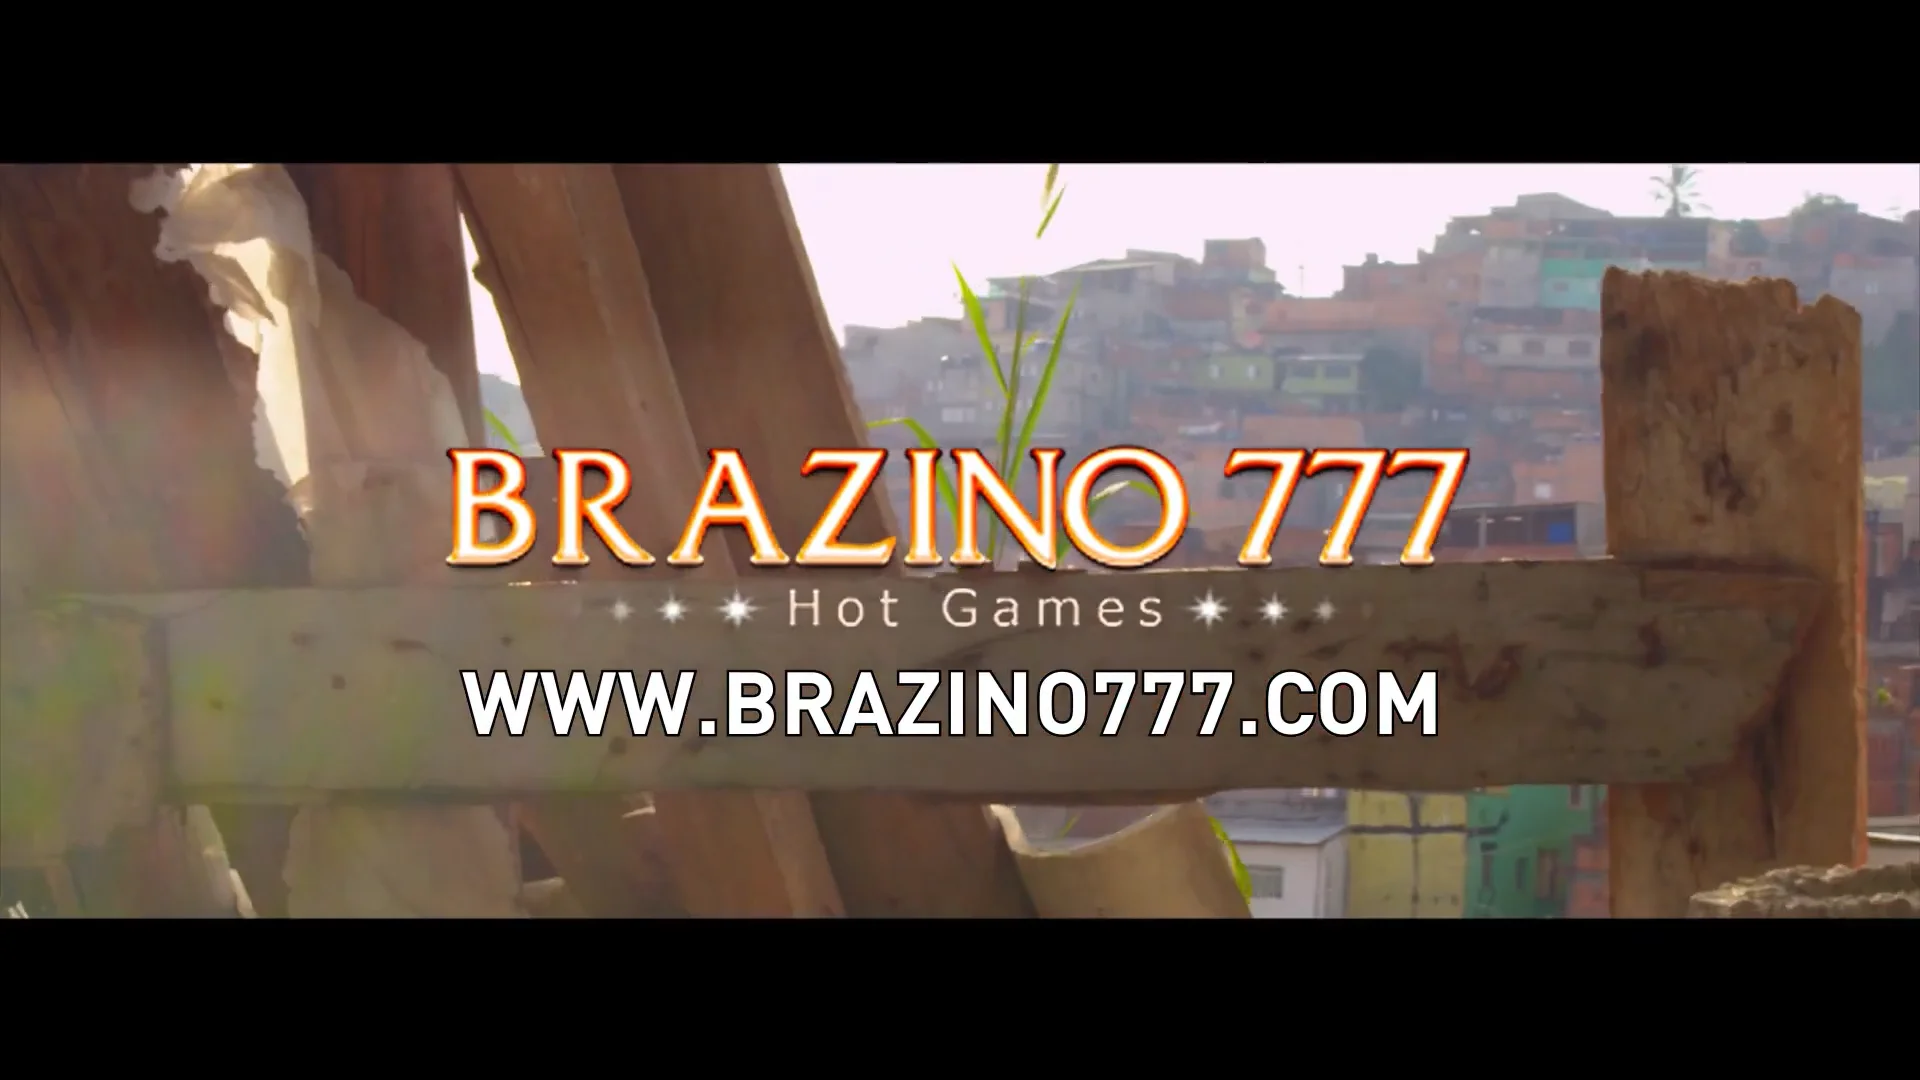 Brazino777 oficial